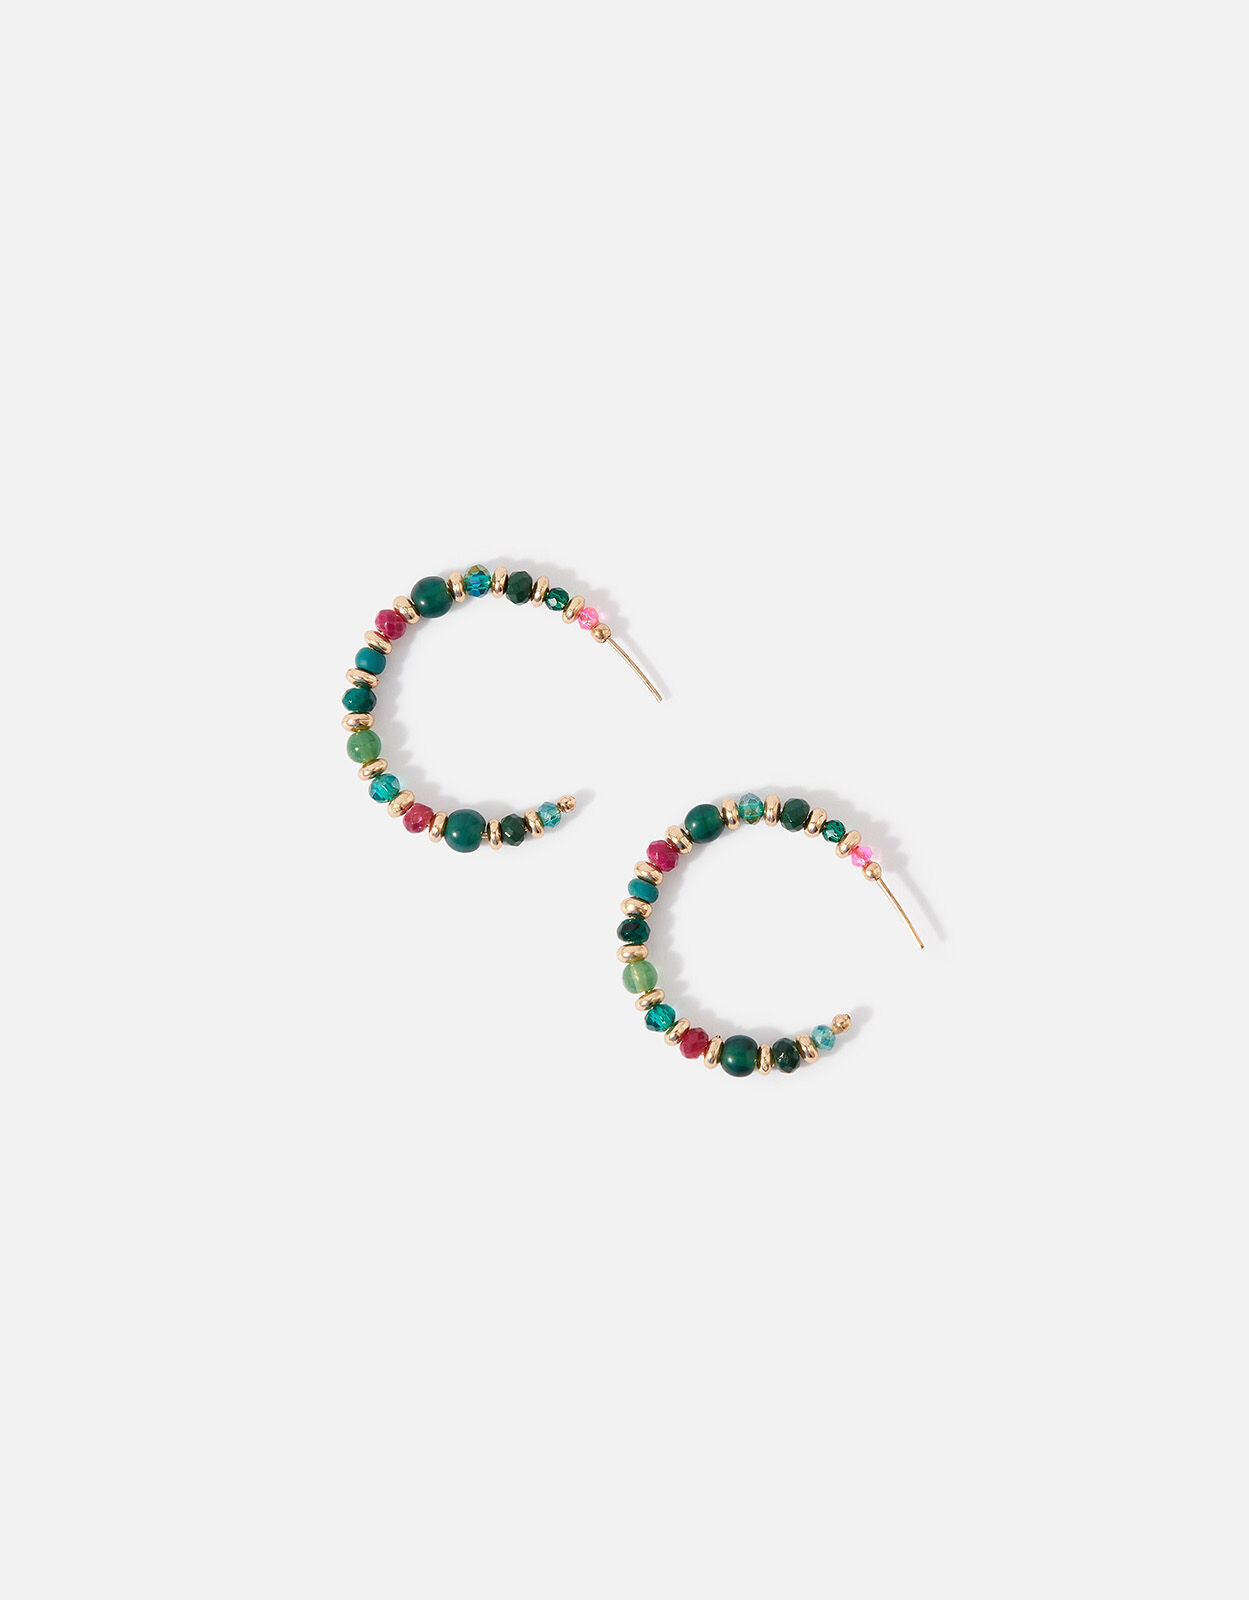 TealGreen Memory Wire Bracelet and Earrings  KittiesKreations